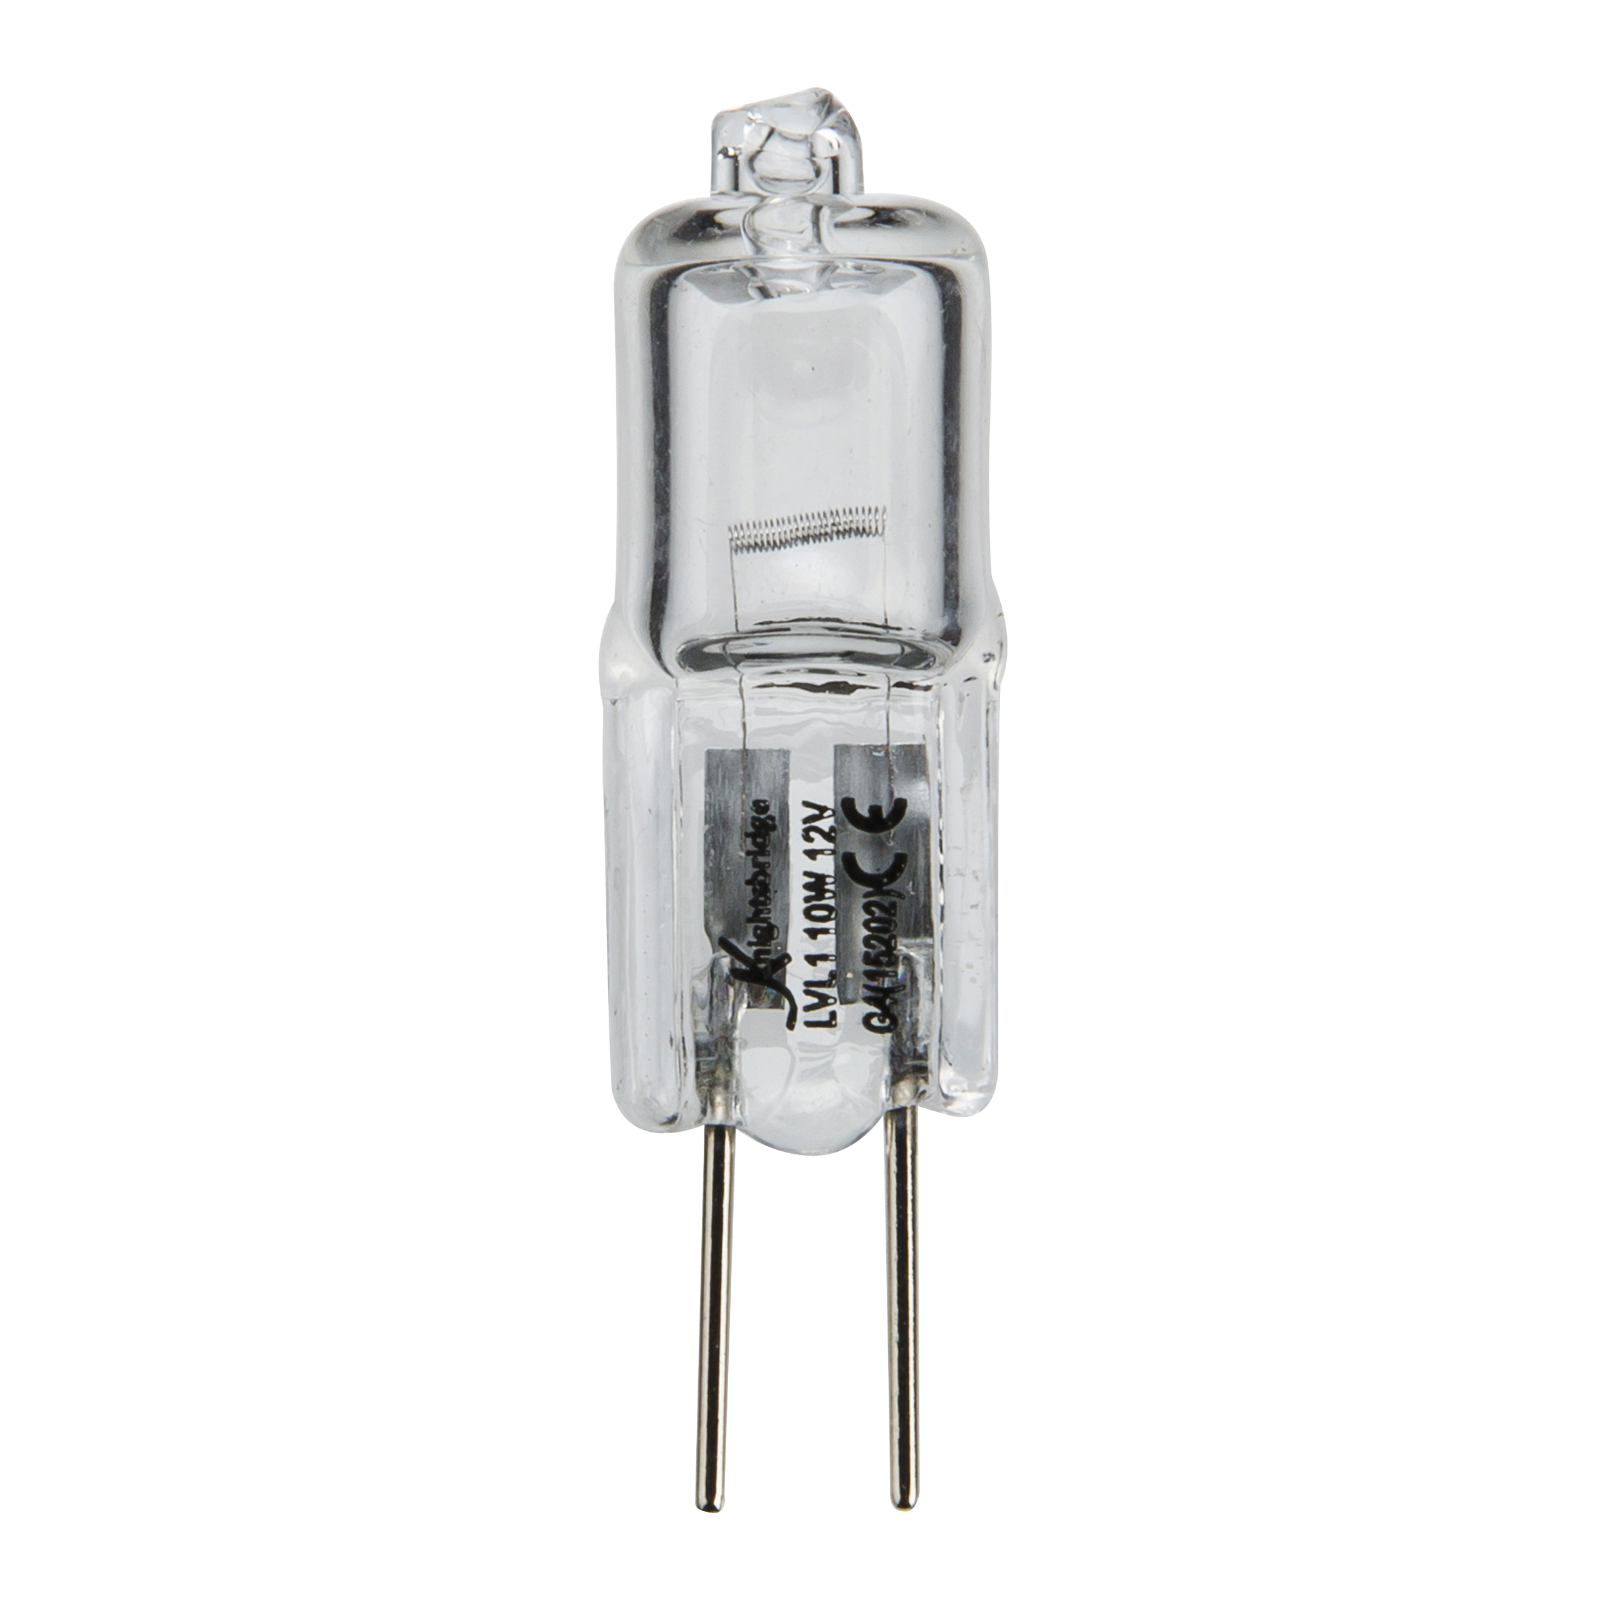 12V G4 50W Low Voltage Halogen Capsule Lamp Warm White 3000K - LVL3 